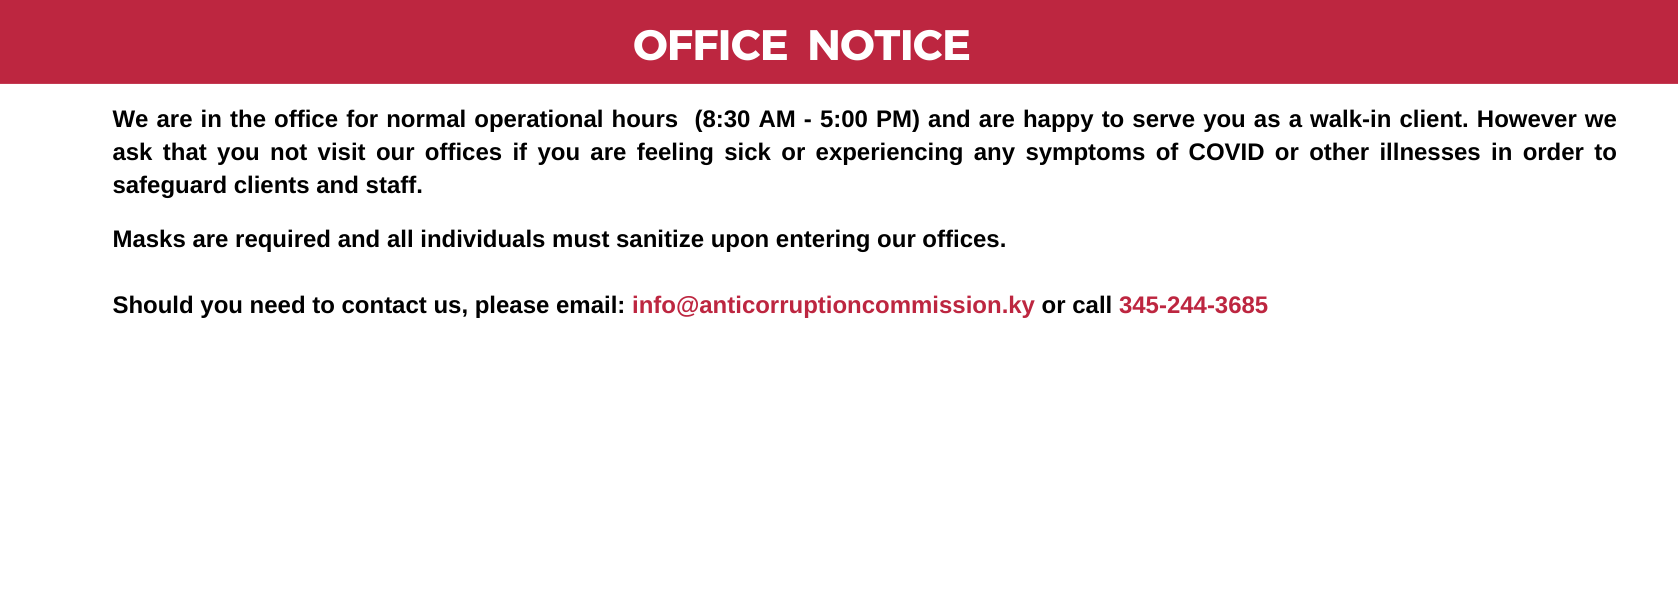 Office Notice